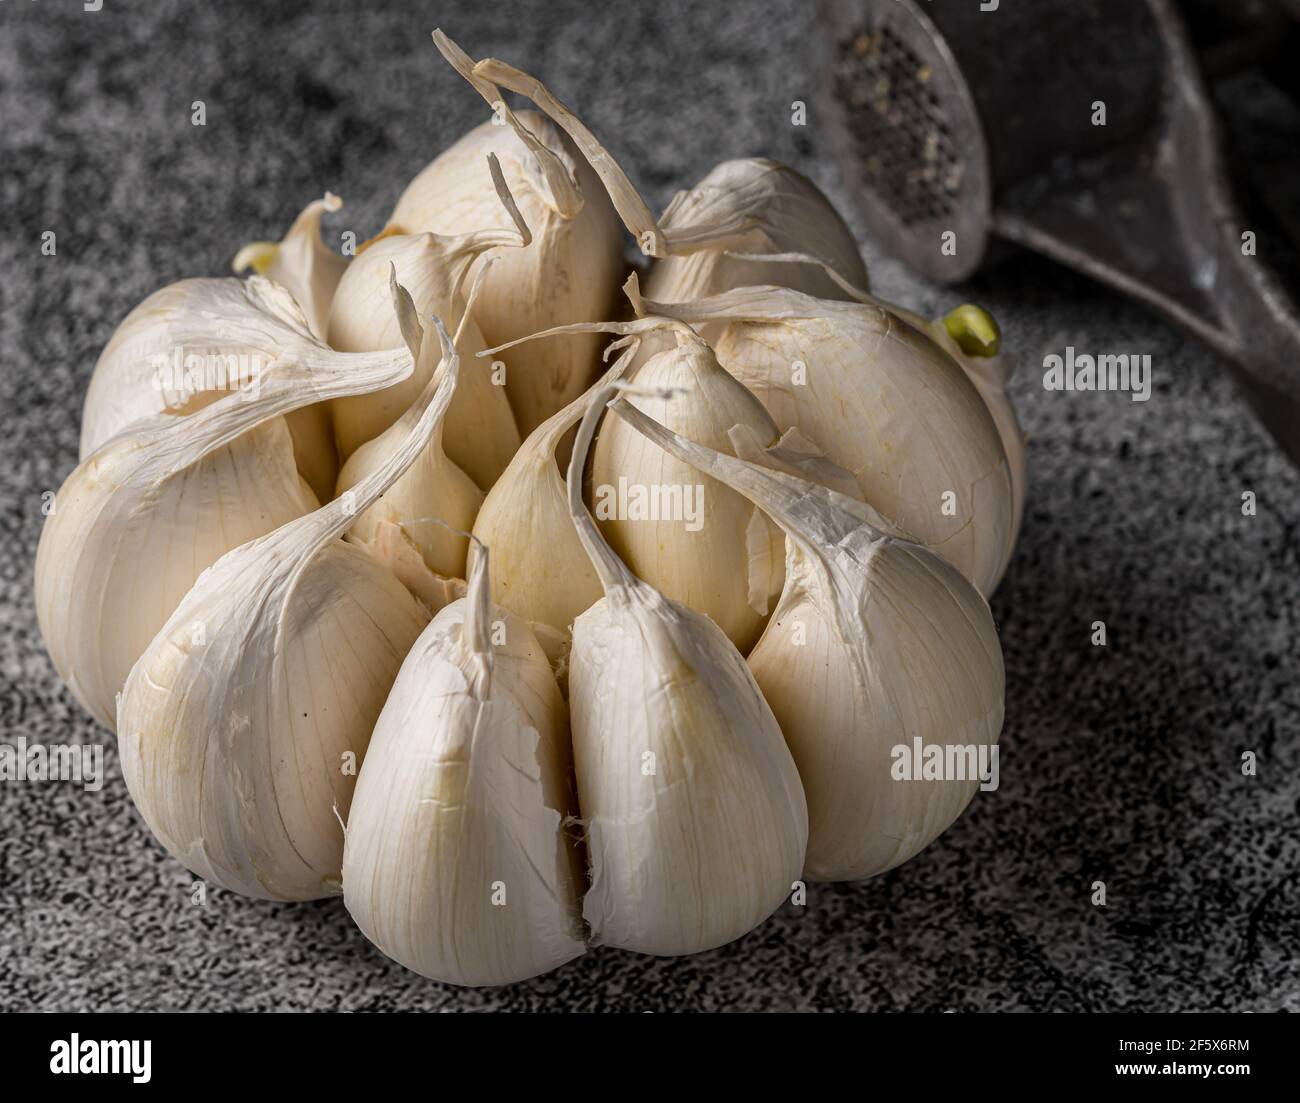 Garlic bulb and a garlic press. Stock Photo